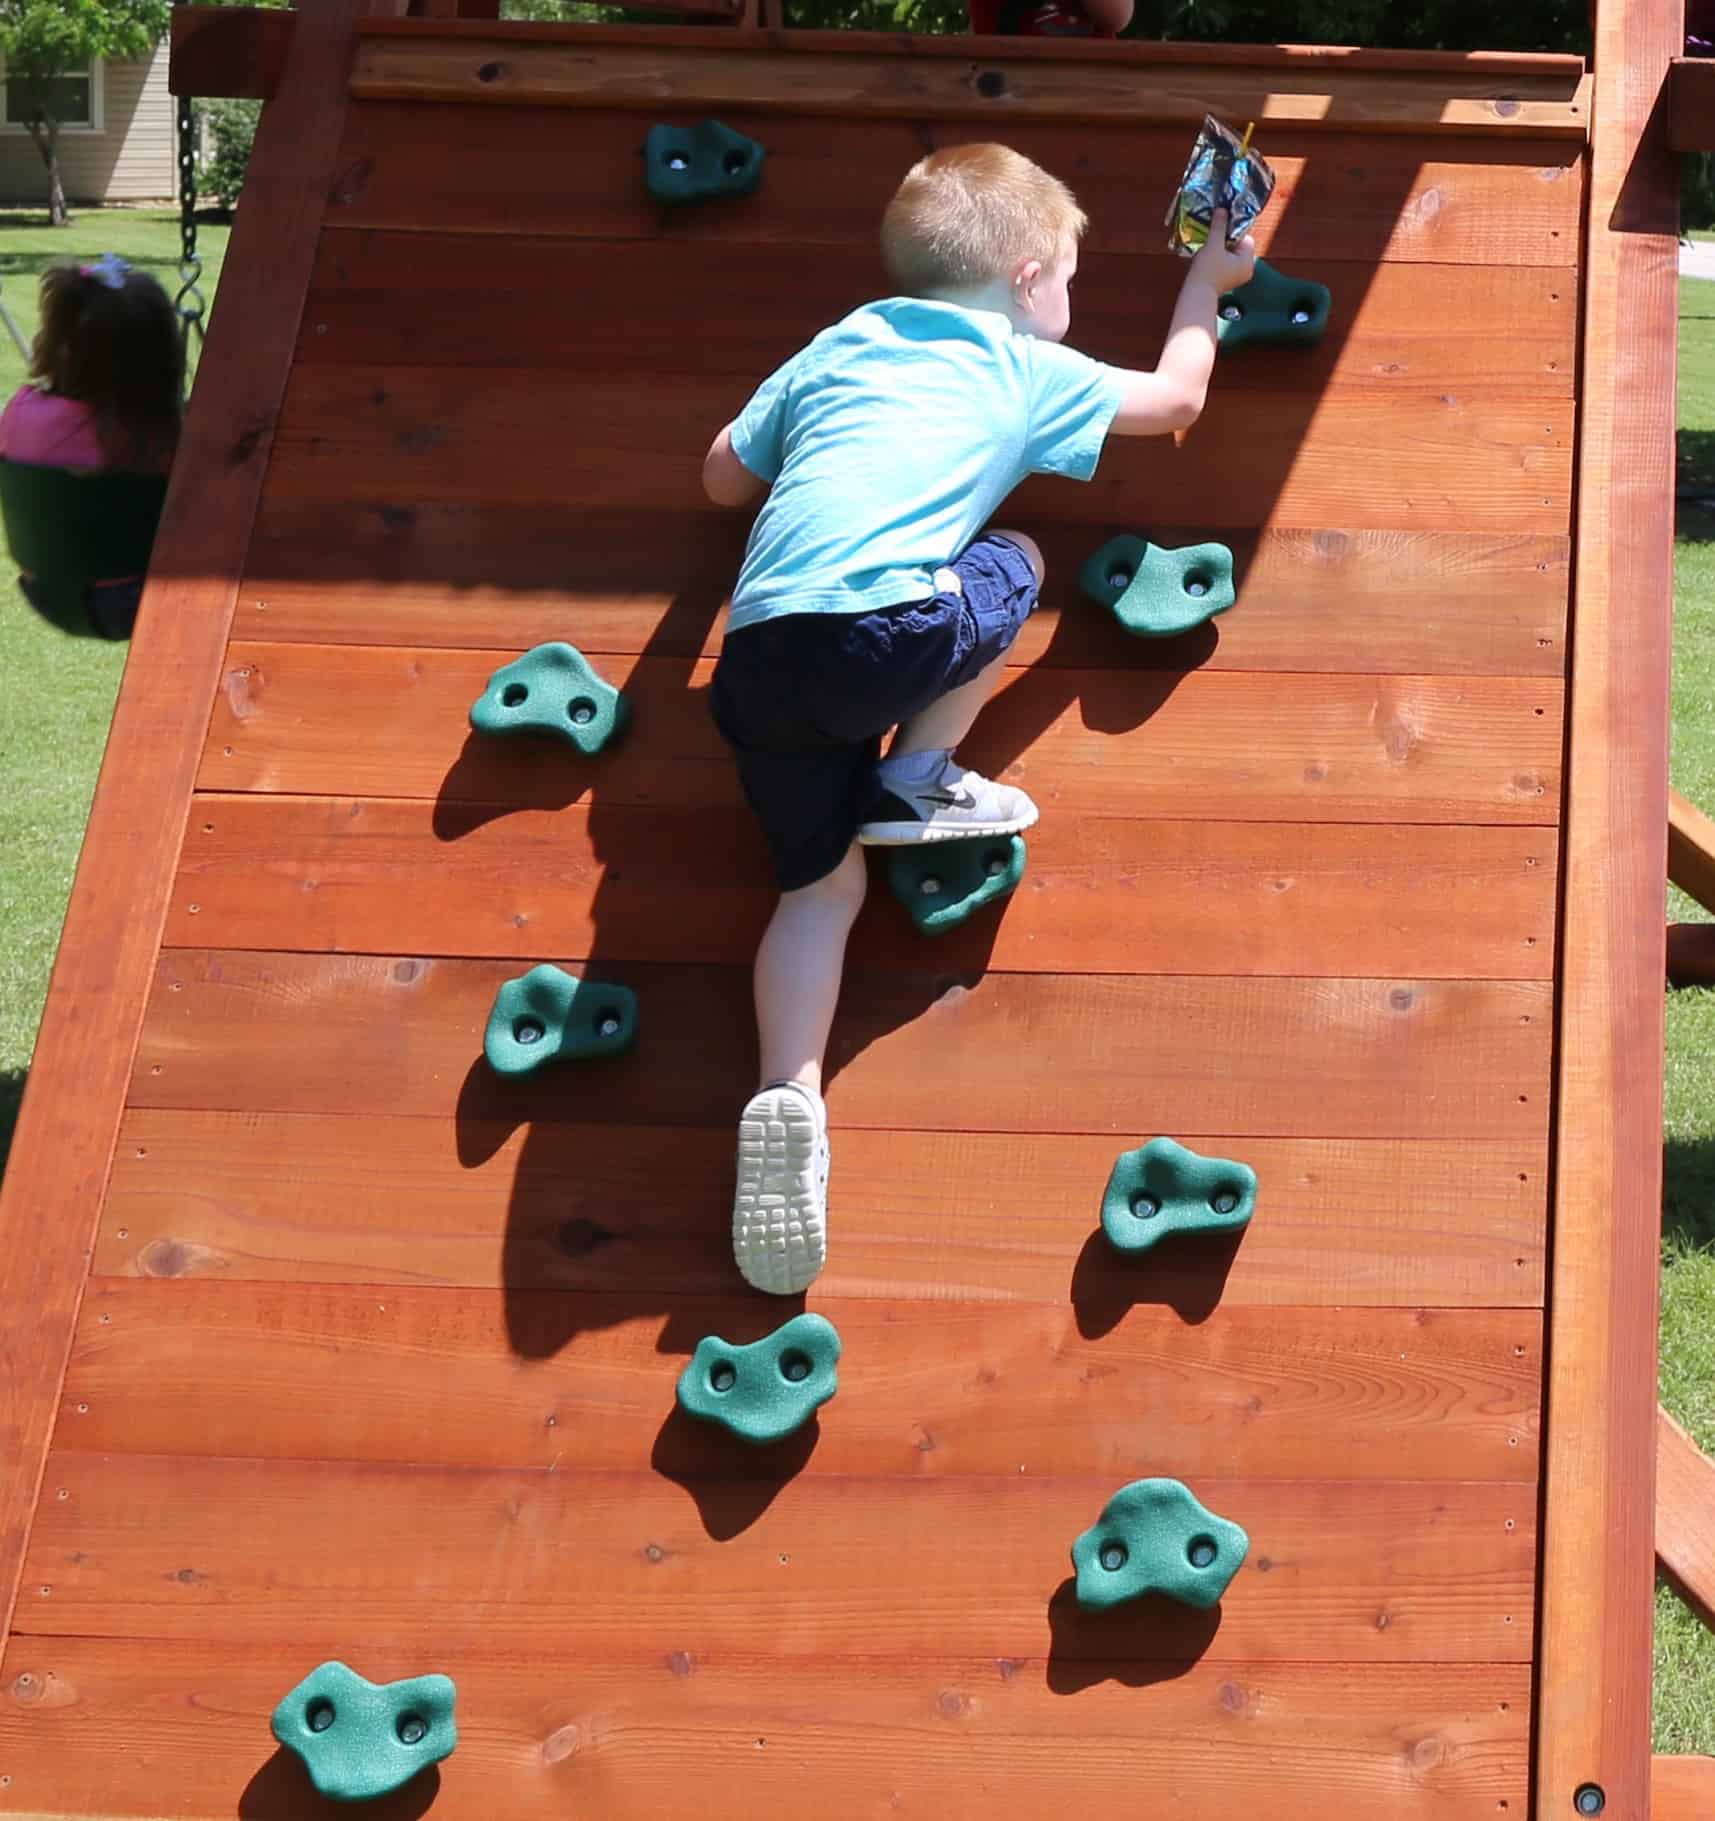 kingwood, texas, accessories little boy climbing rock wall climber on playset